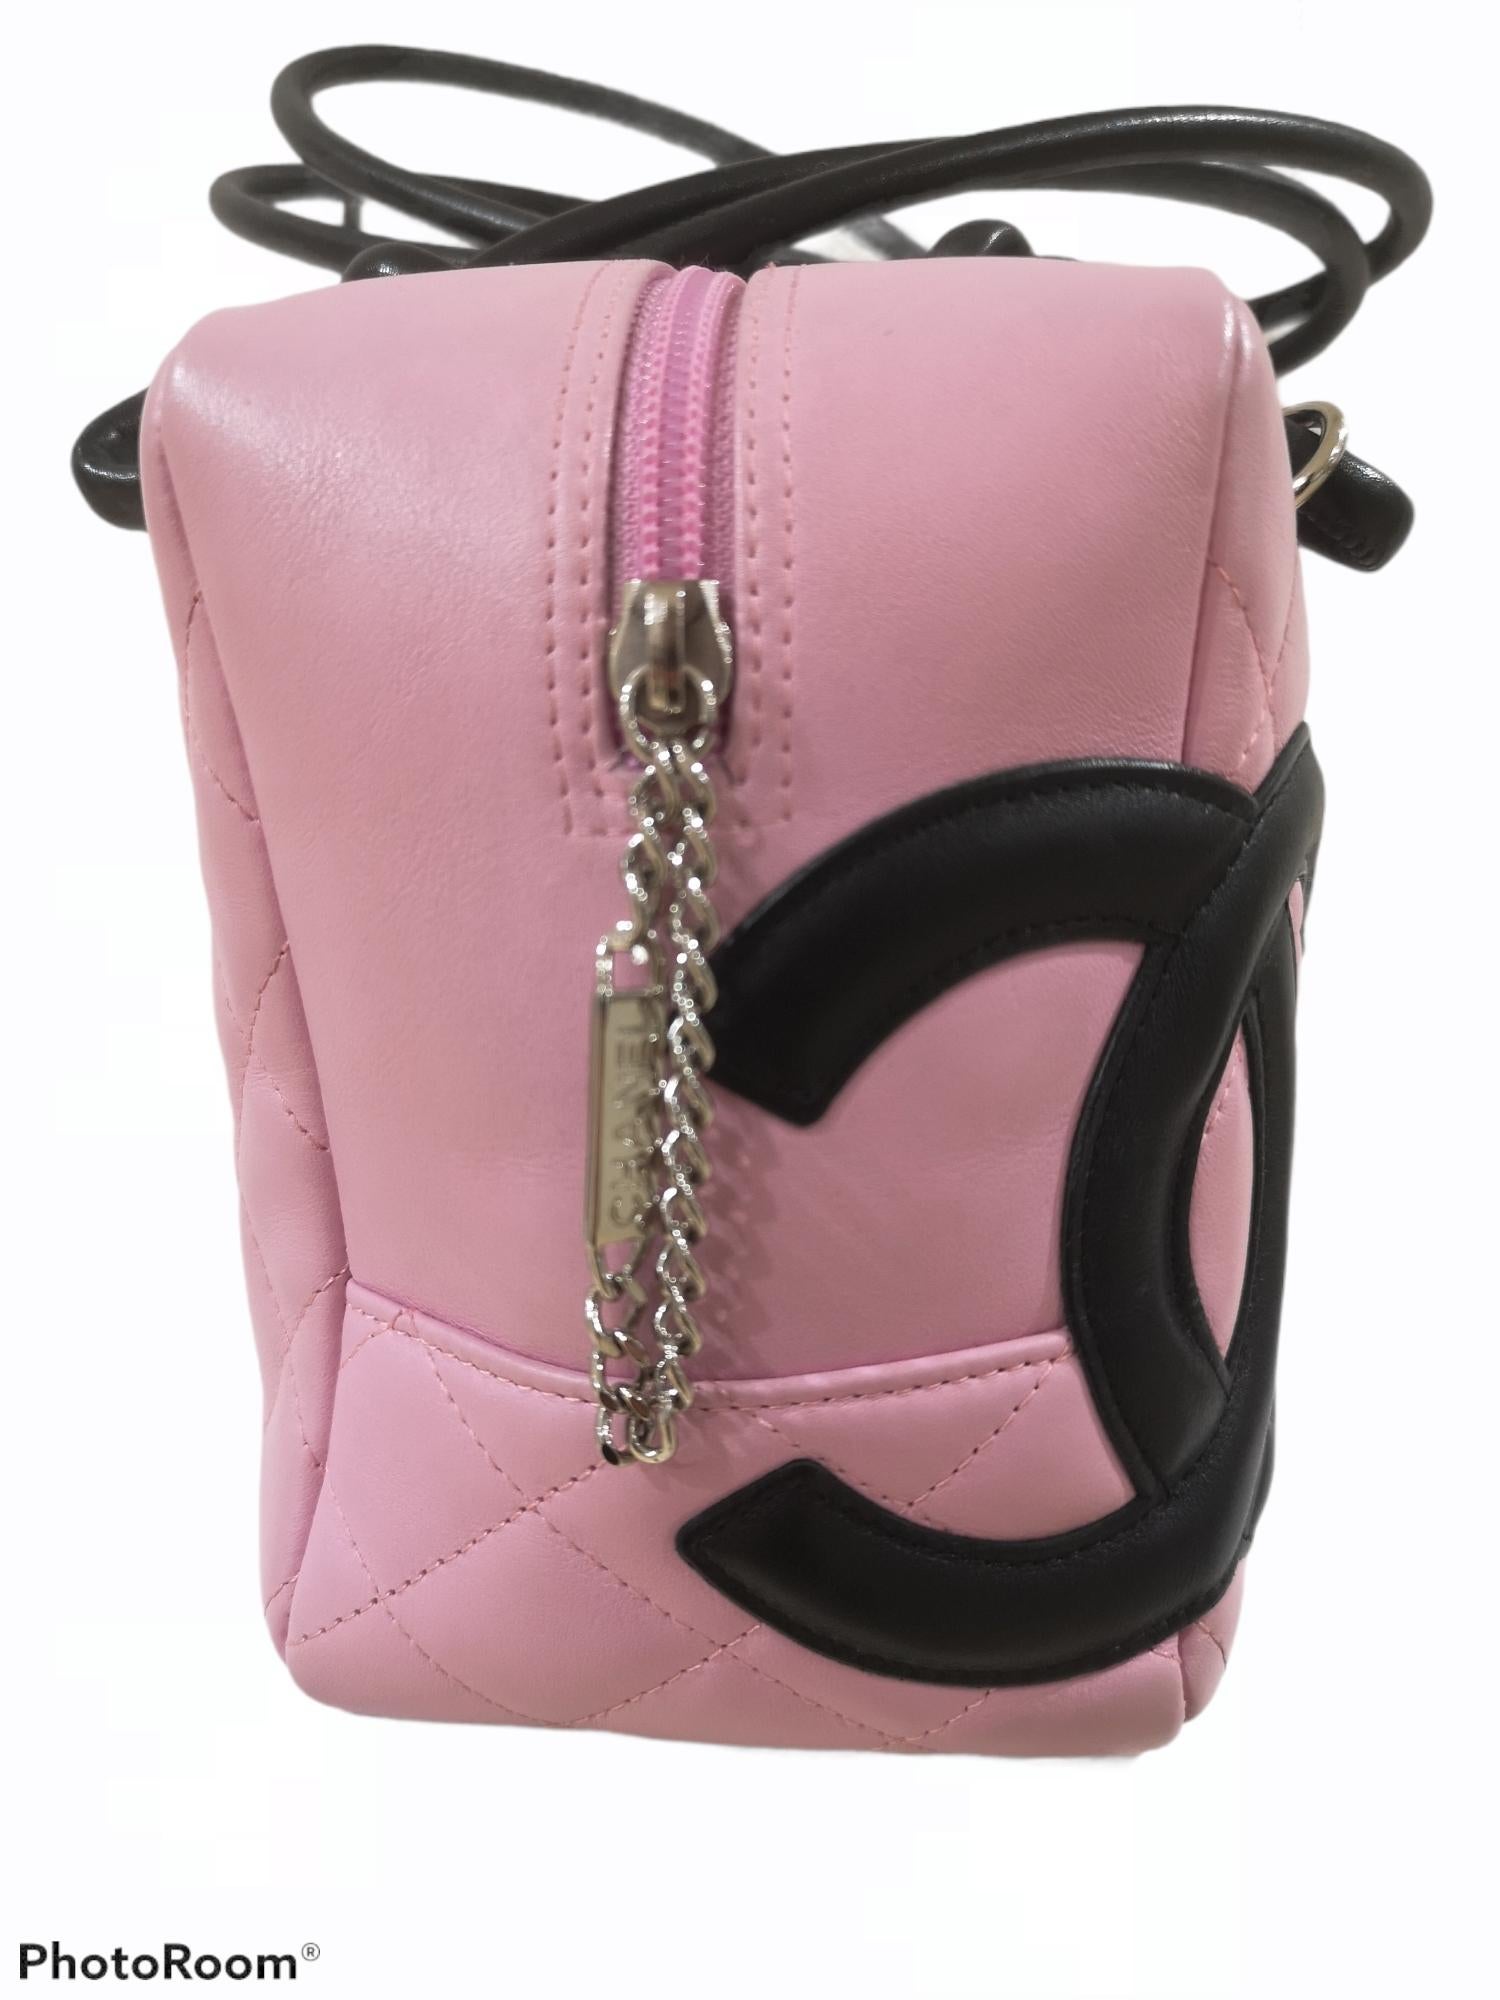 Women's Chanel pink black quilter leather Cambon bowler tote bag / shoulder bag